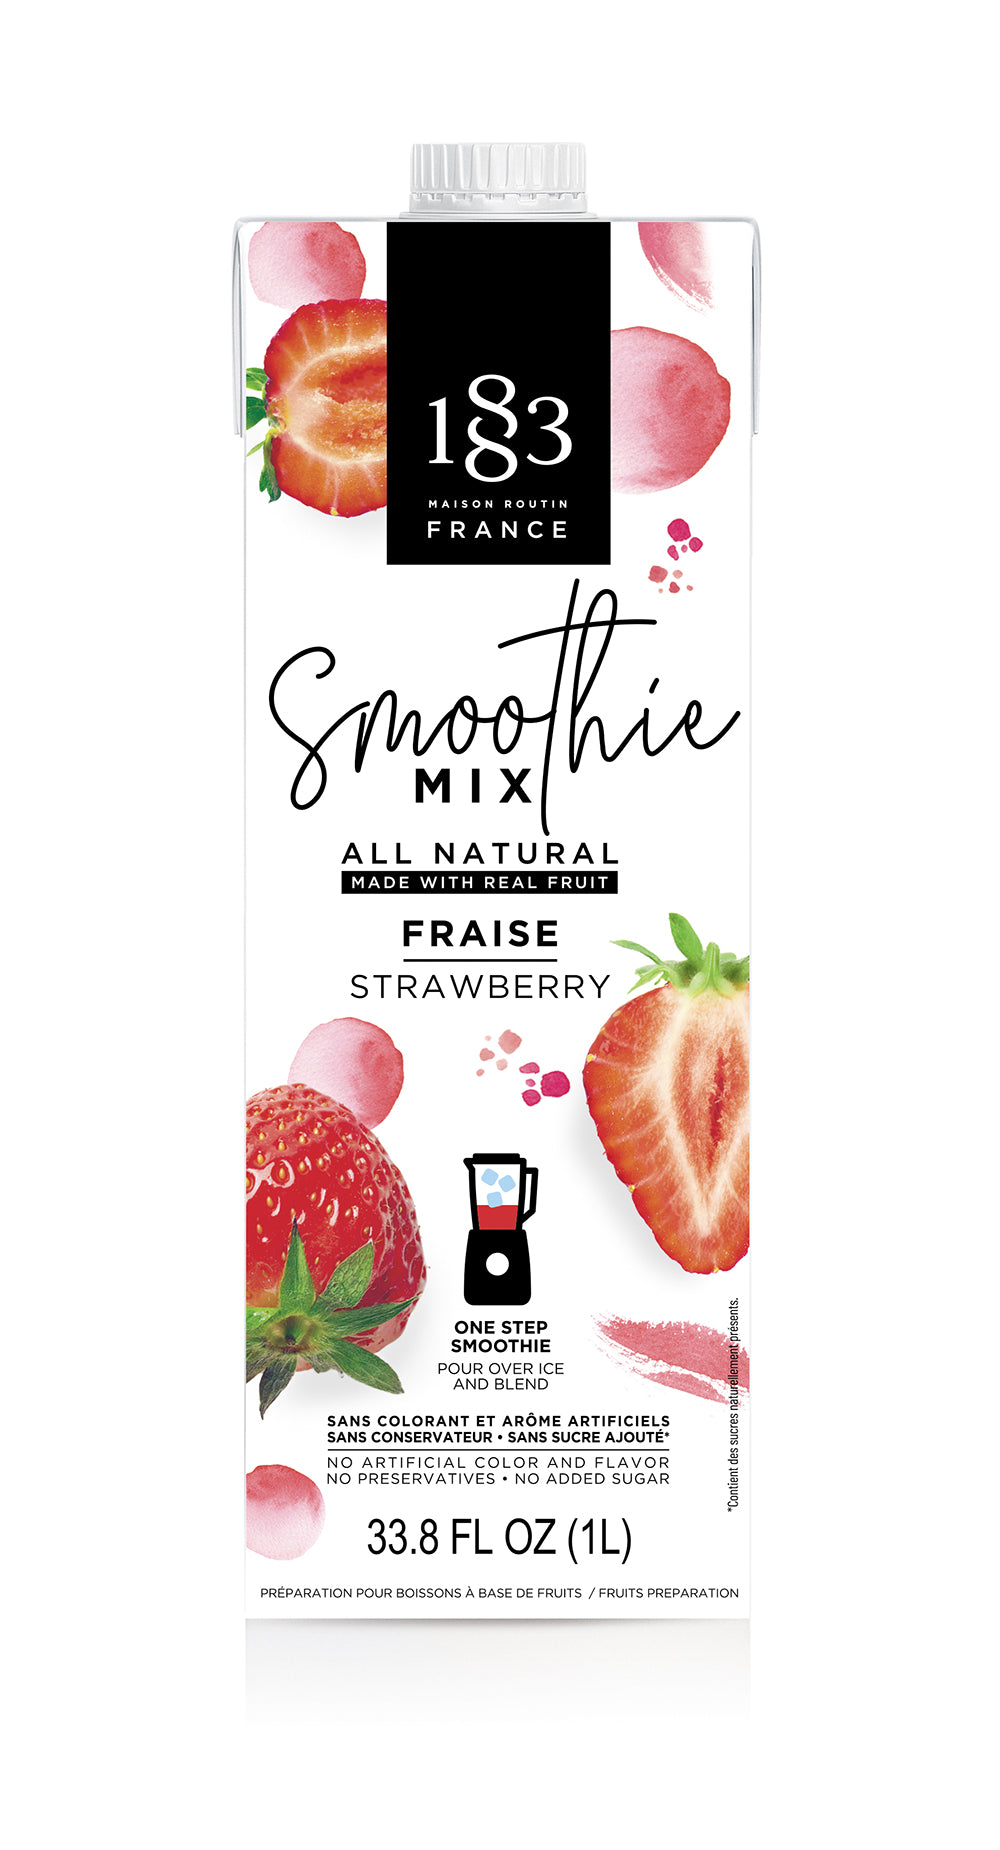 1883 Smoothie Mix - 1L Carton: Strawberry